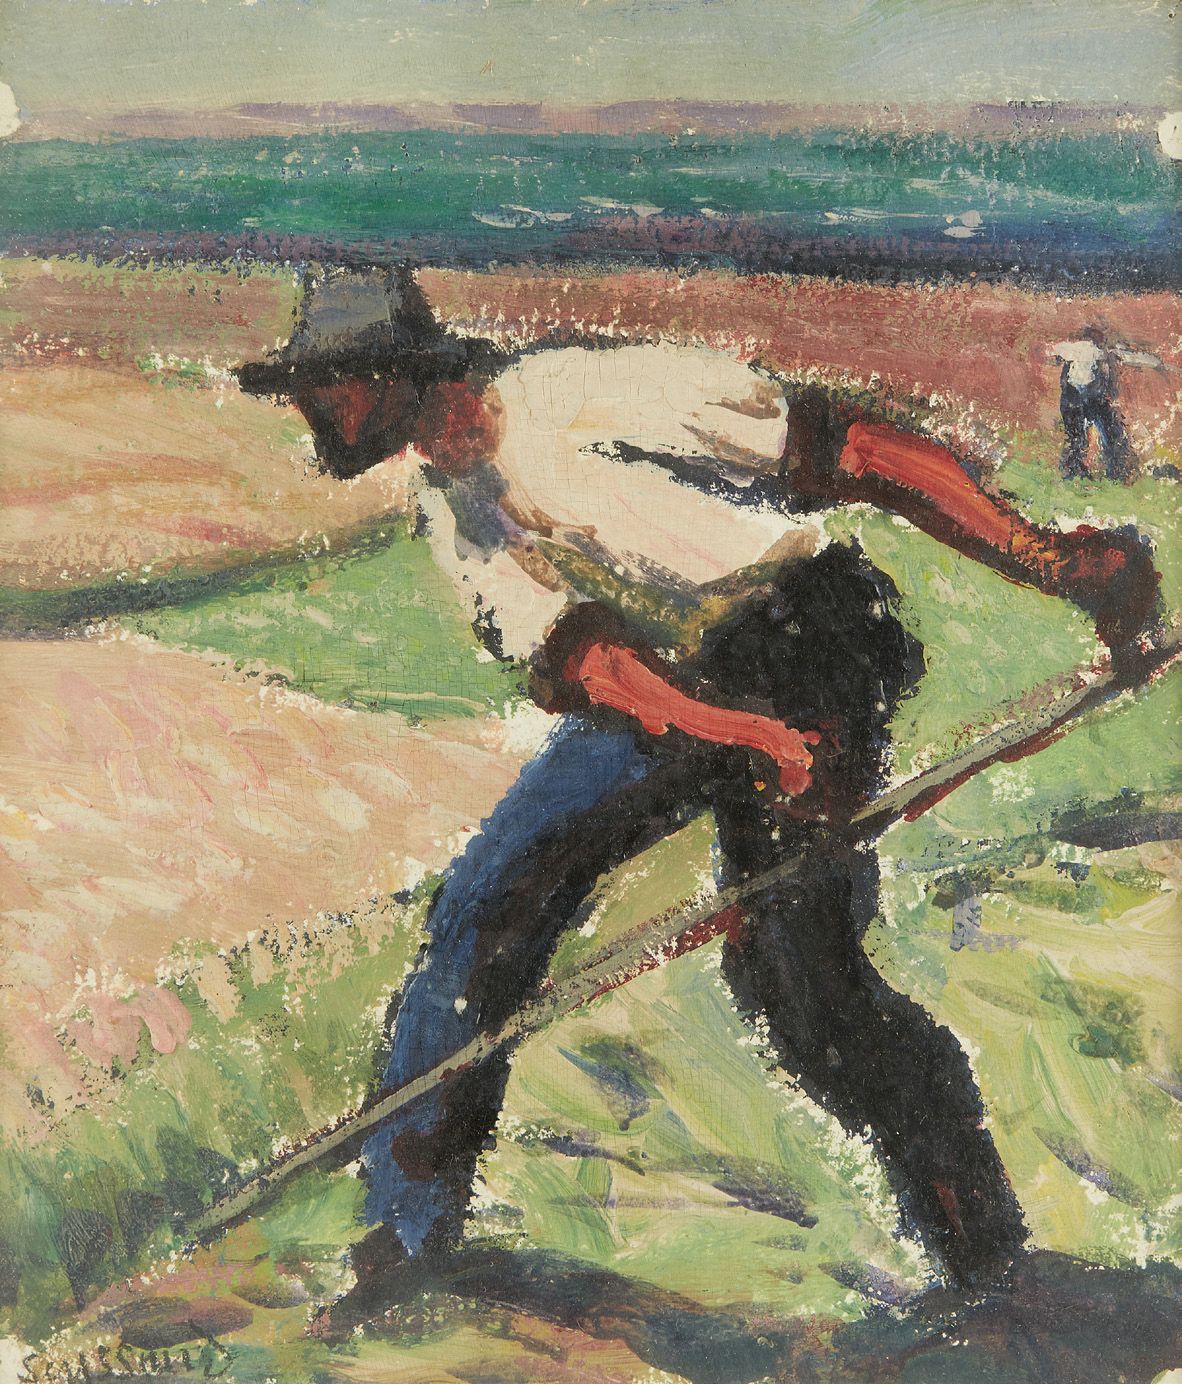 RENE SEYSSAUD (1867-1952) 收割者
纸上油画。
左下角有签名。
20 x 25.5 cm
画框背面有标签 Montauti, Nice